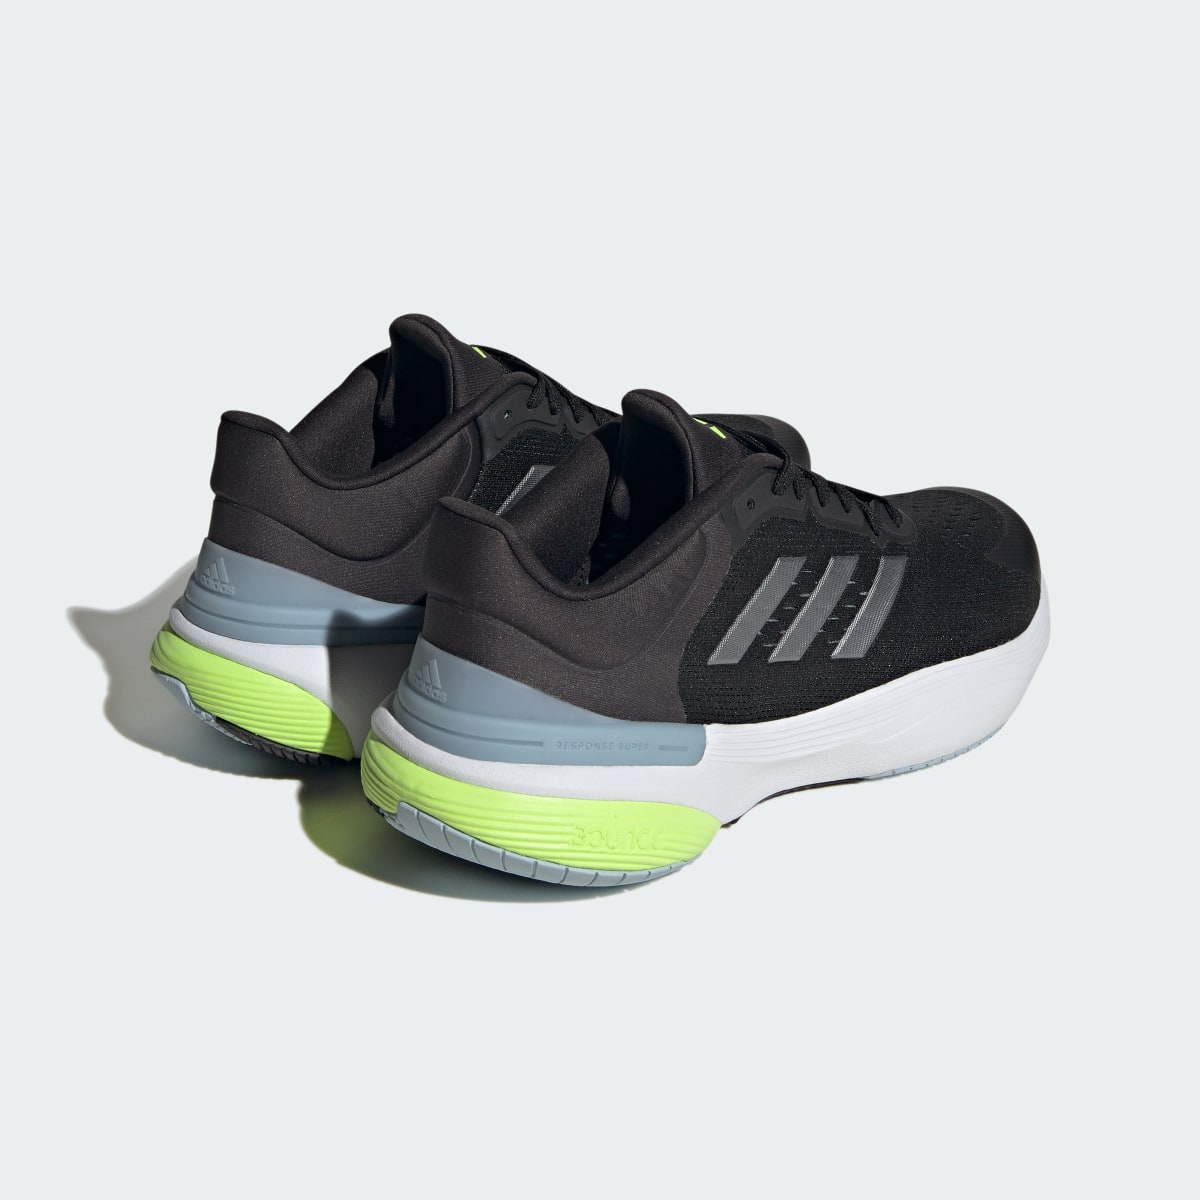 Adidas Response Super 3.0 Shoes. 8